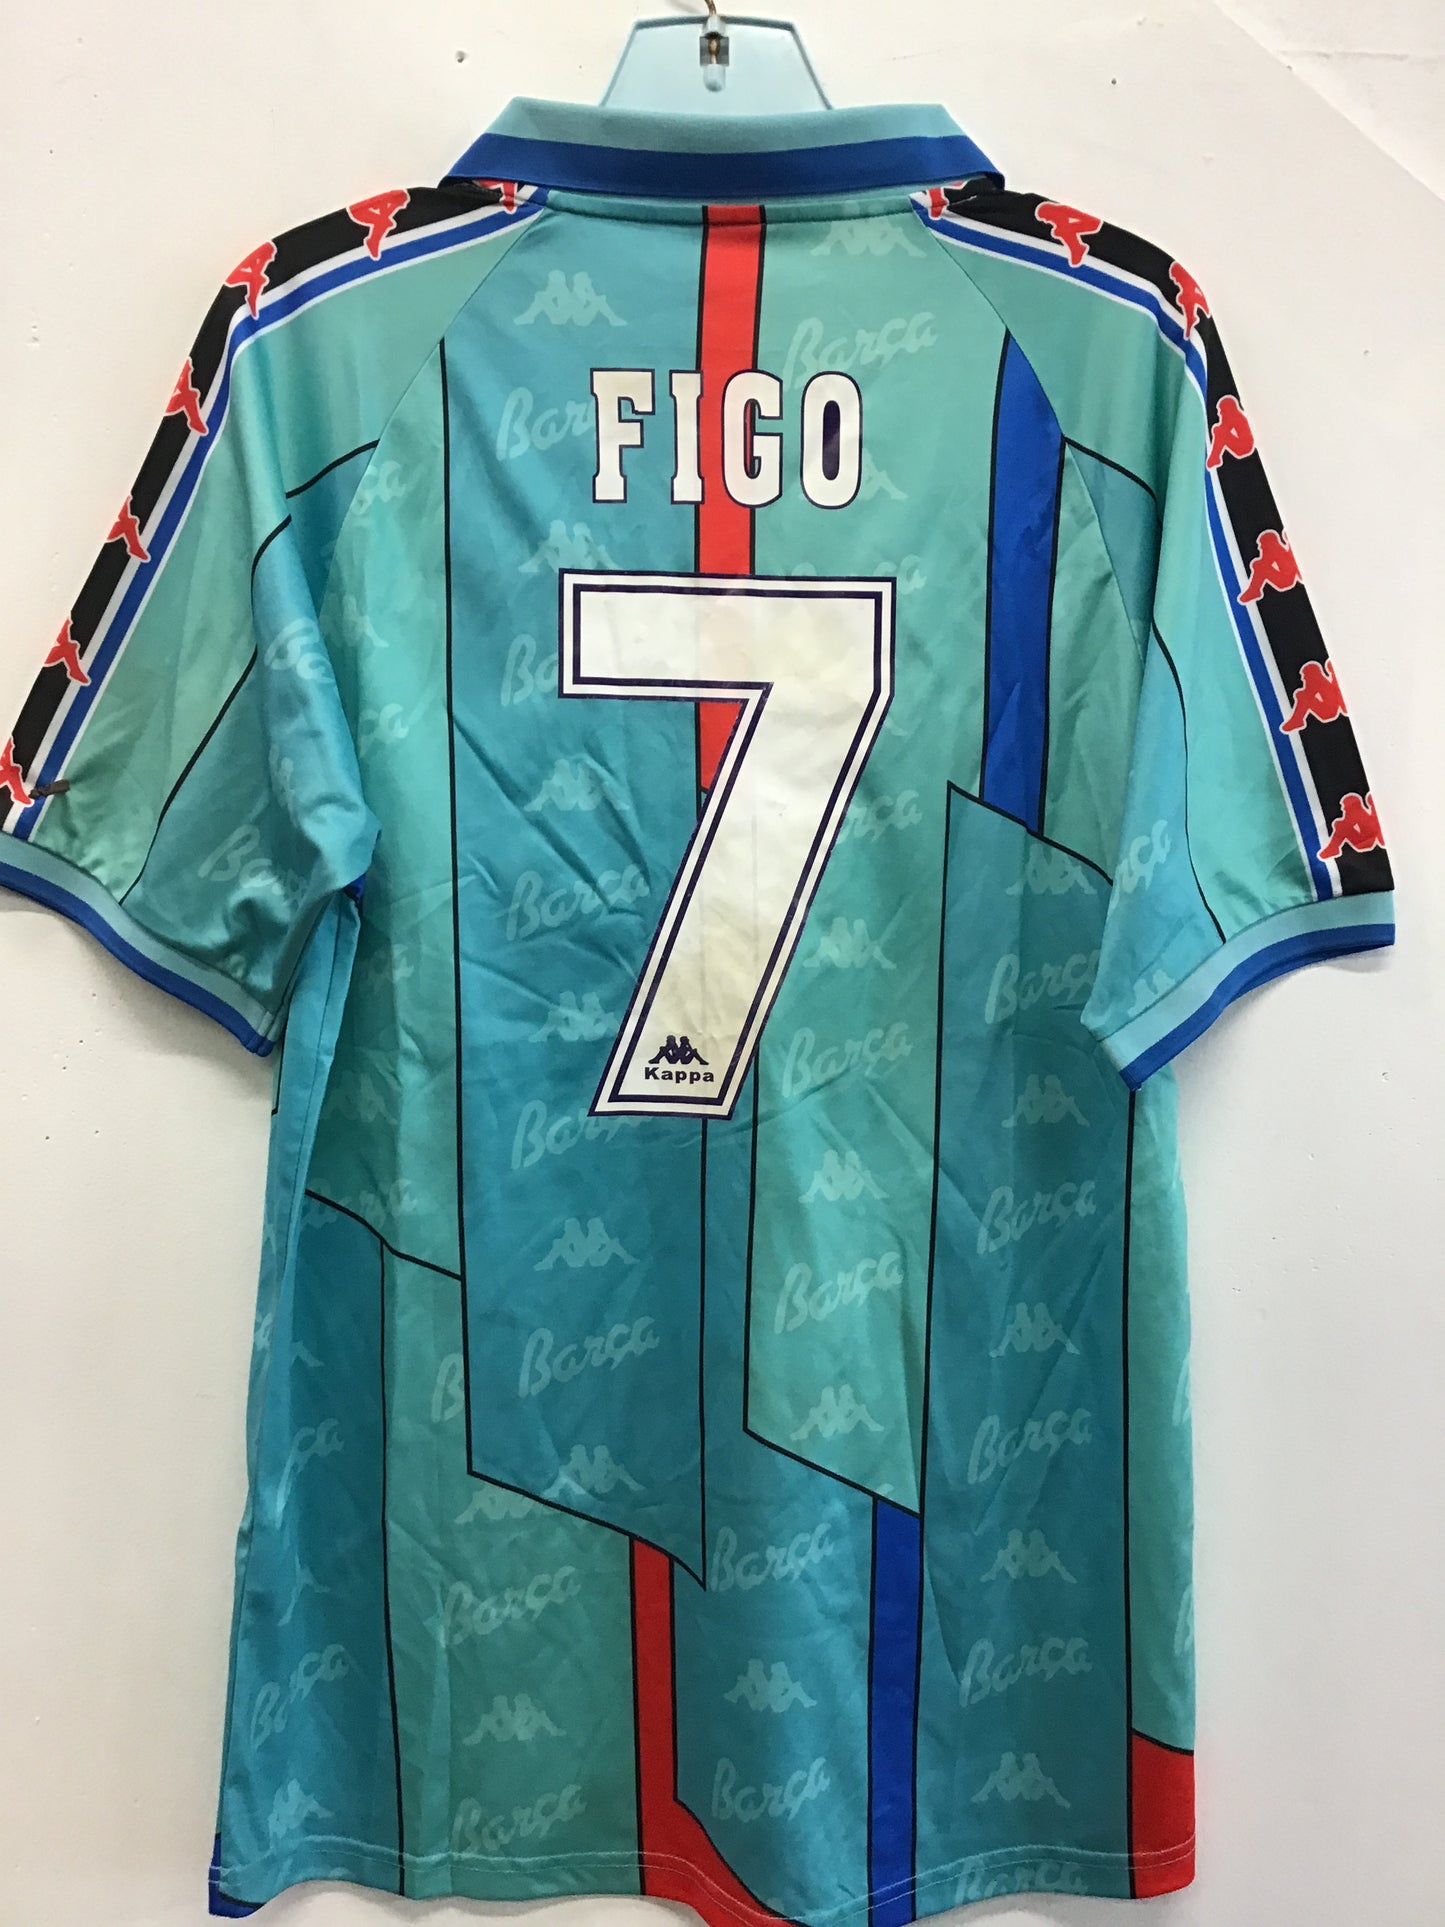 Kappa FCB Barca Figo #7 Jersey Shirt, Size L